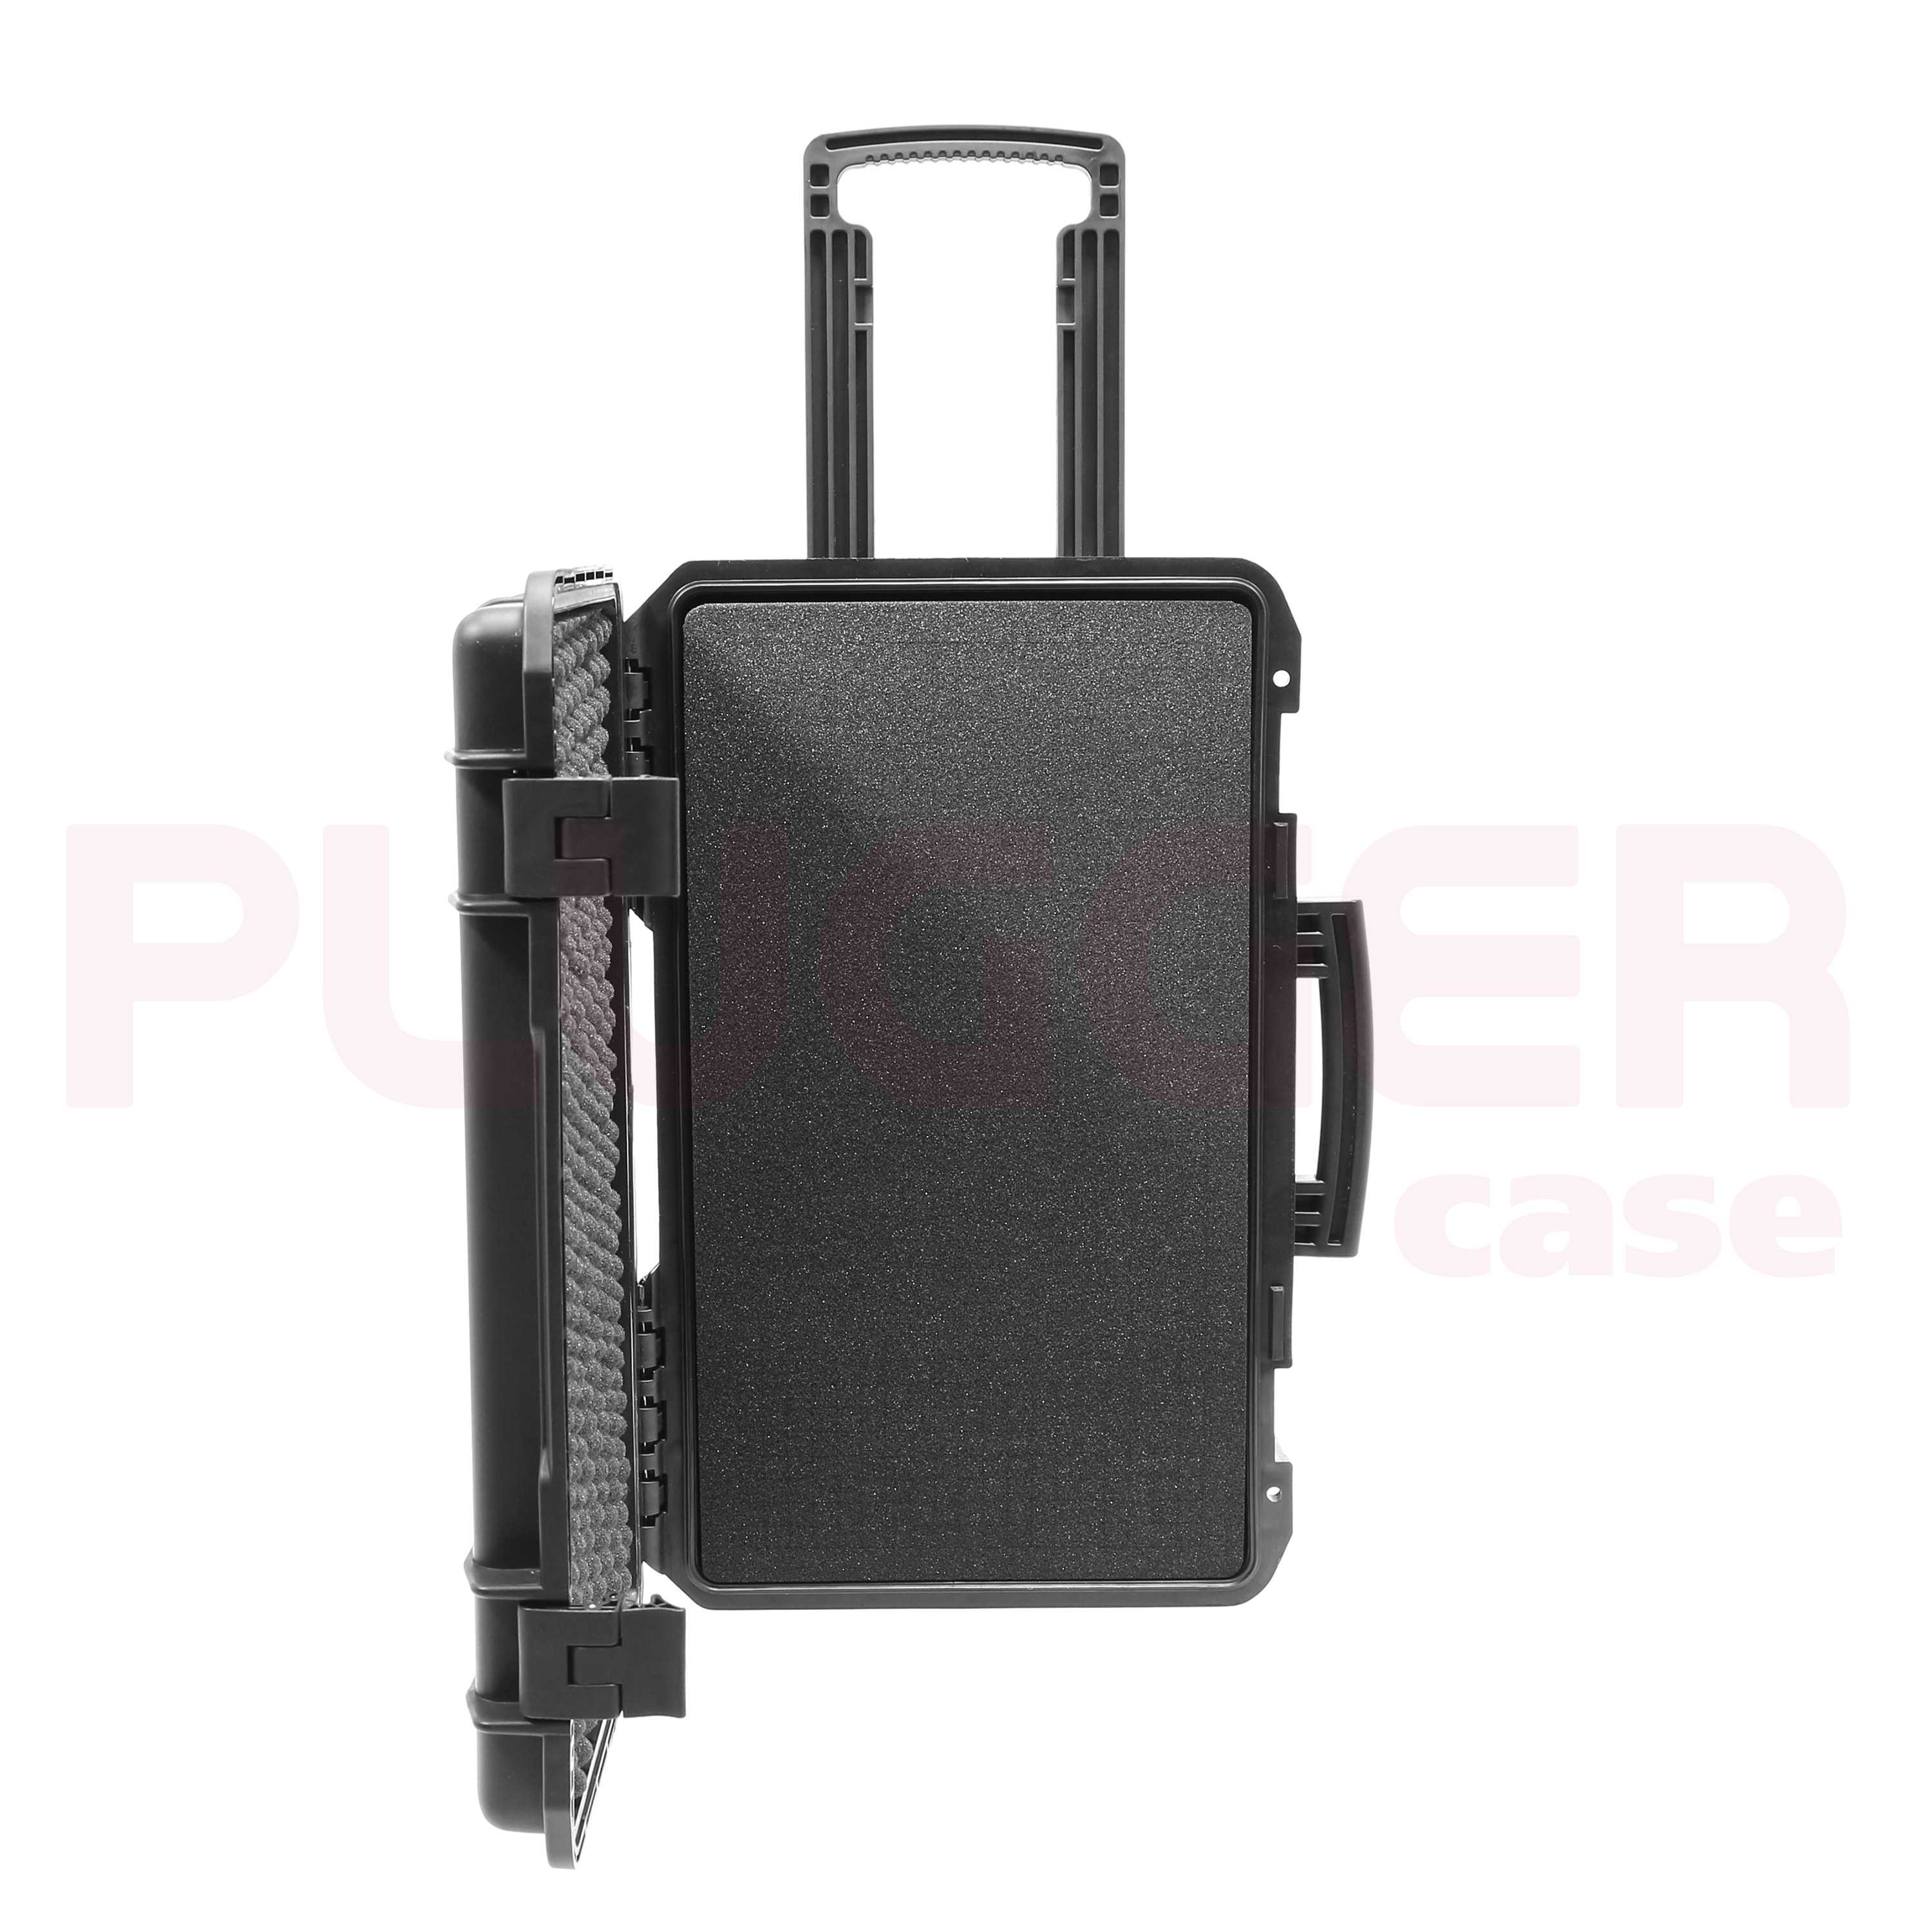 ABS Flightcase 563623 Plugger Case